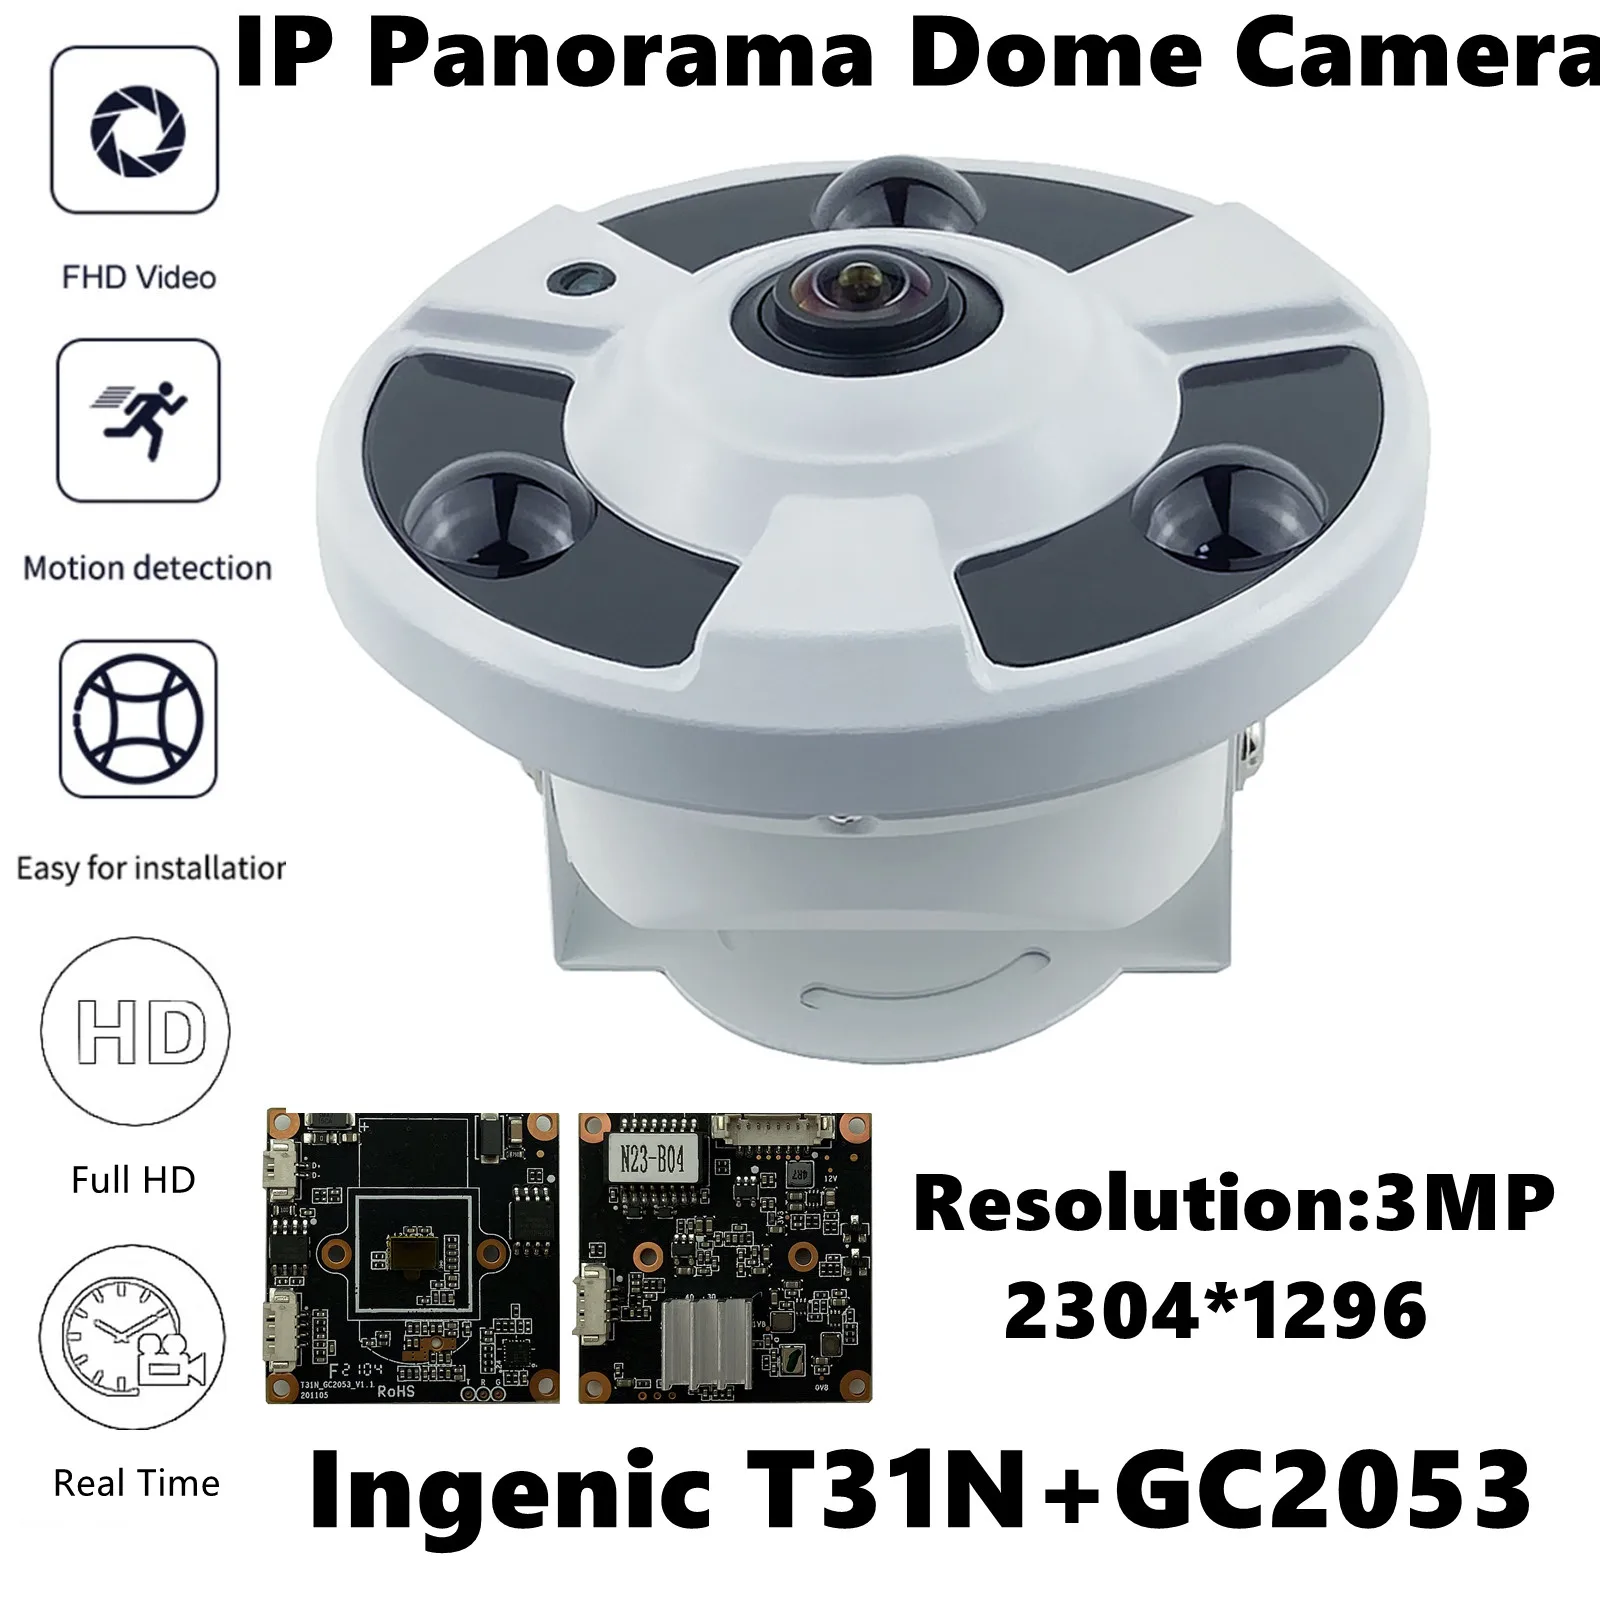 Панорамная IP-камера T31N + GC2053 металлическая потолочная купольная камера рыбий